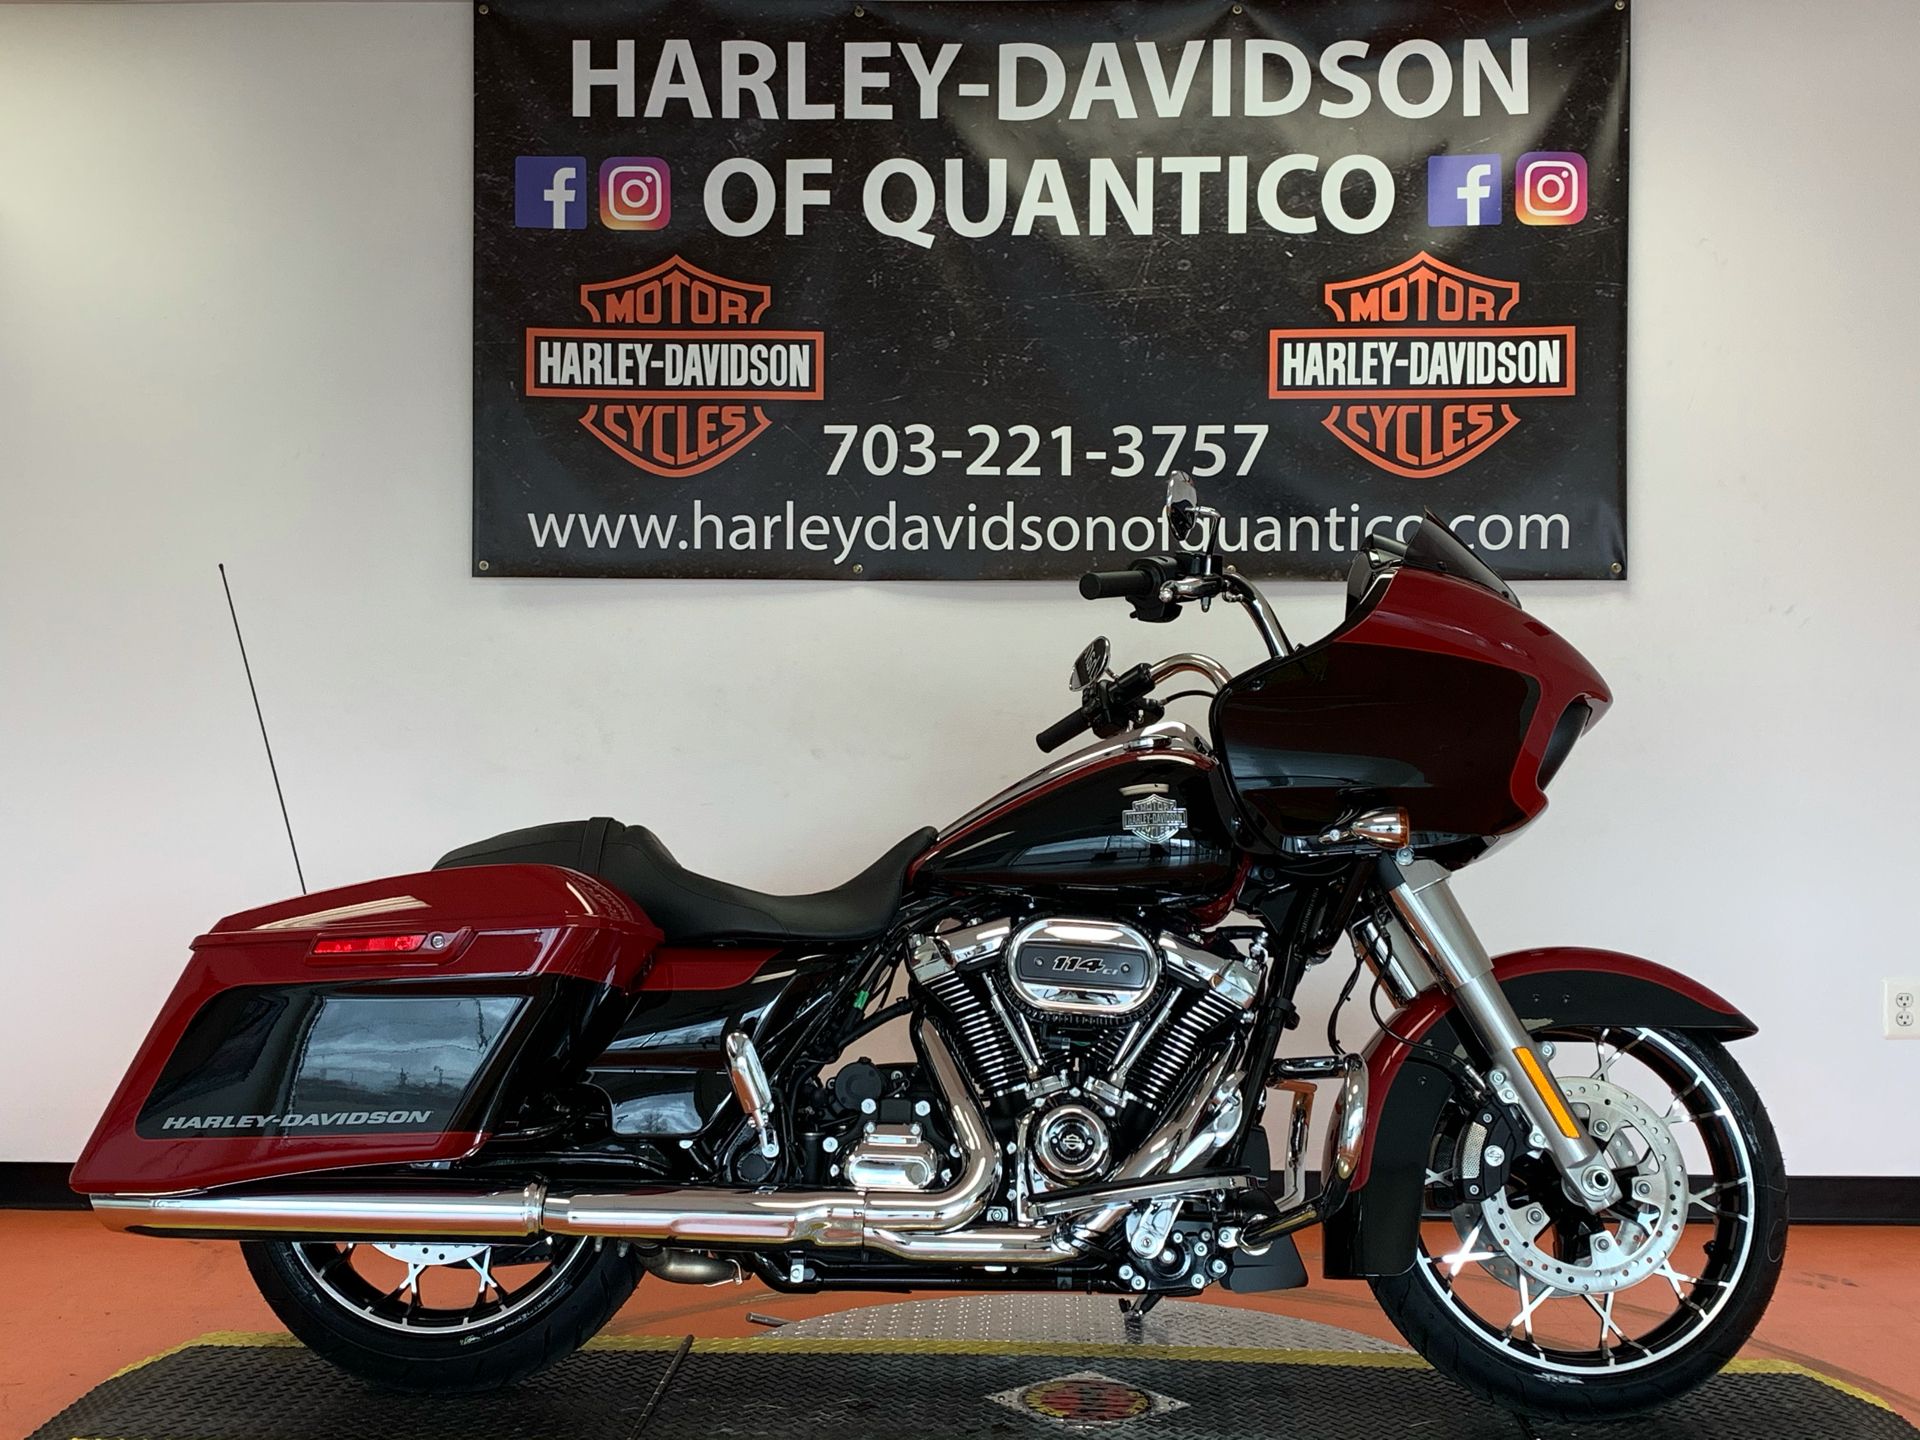 New 2021 Harley Davidson Road Glide Special Billiard Red Vivid Black Chrome Option Motorcycles In Dumfries Va 620617